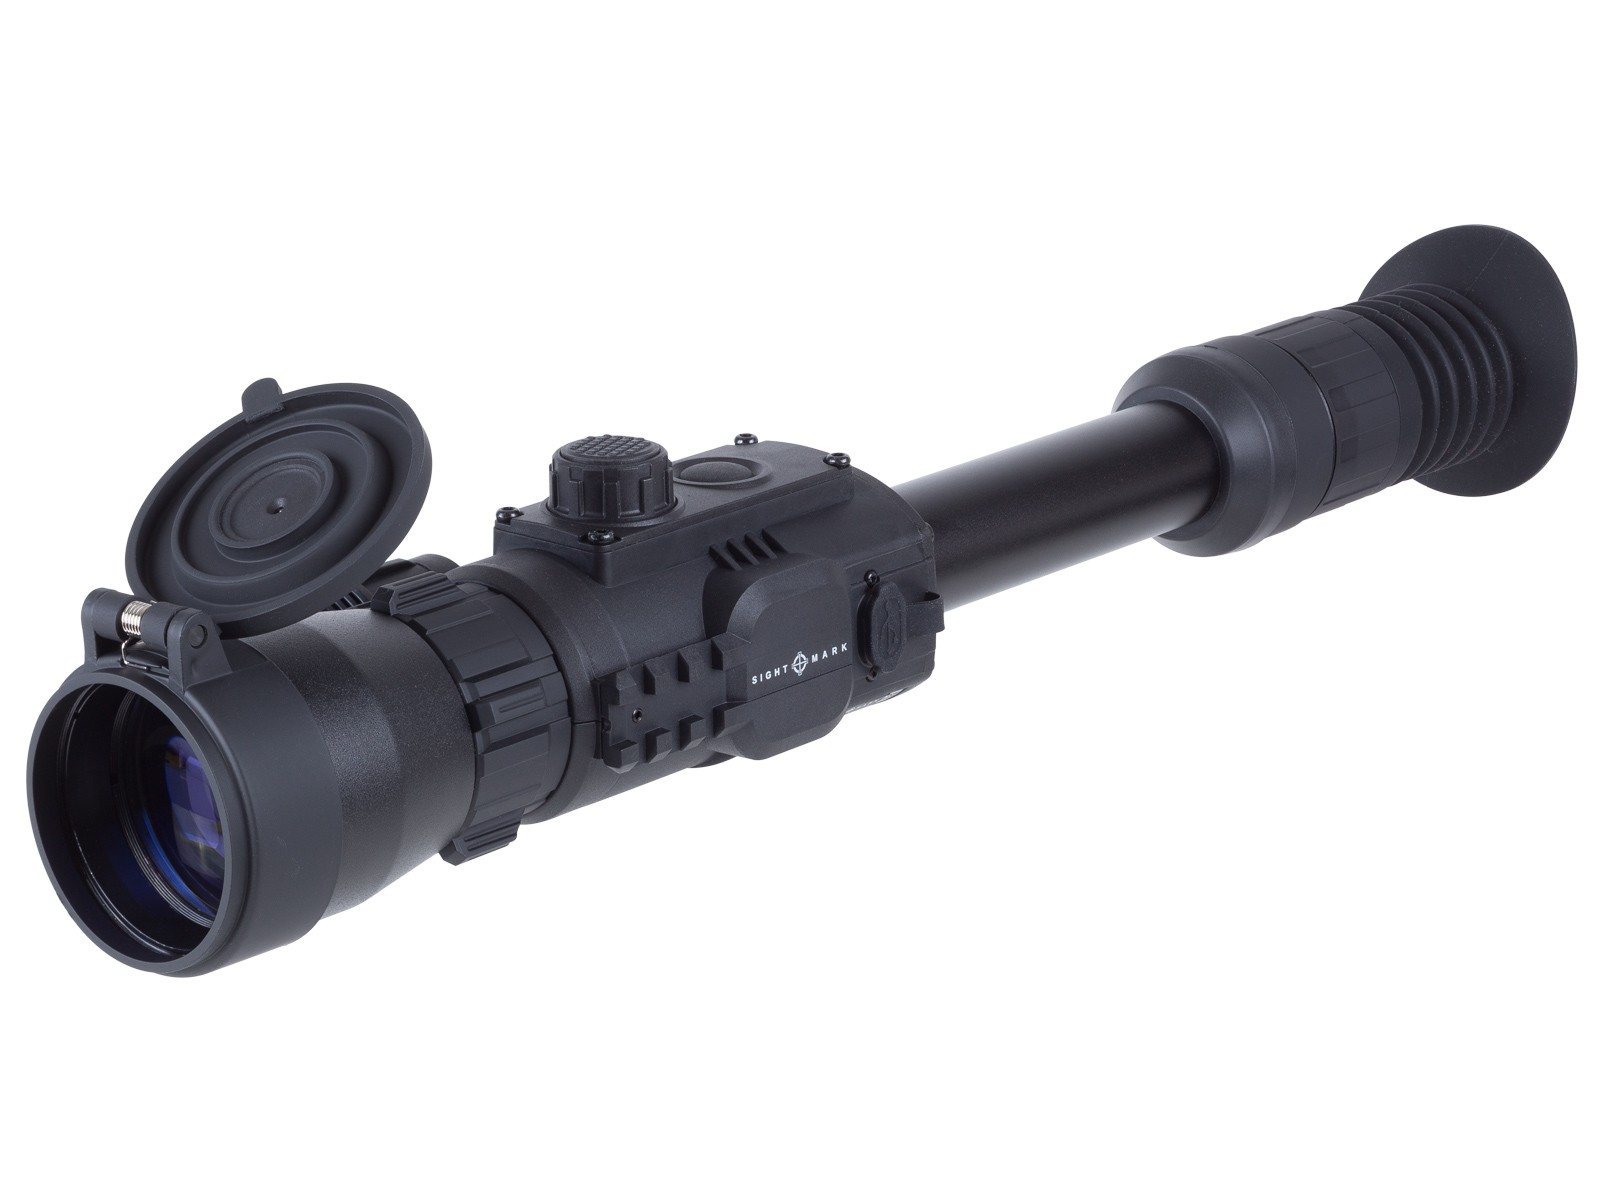 Photon RT 6-12x50s Digital Night Vision Riflescope